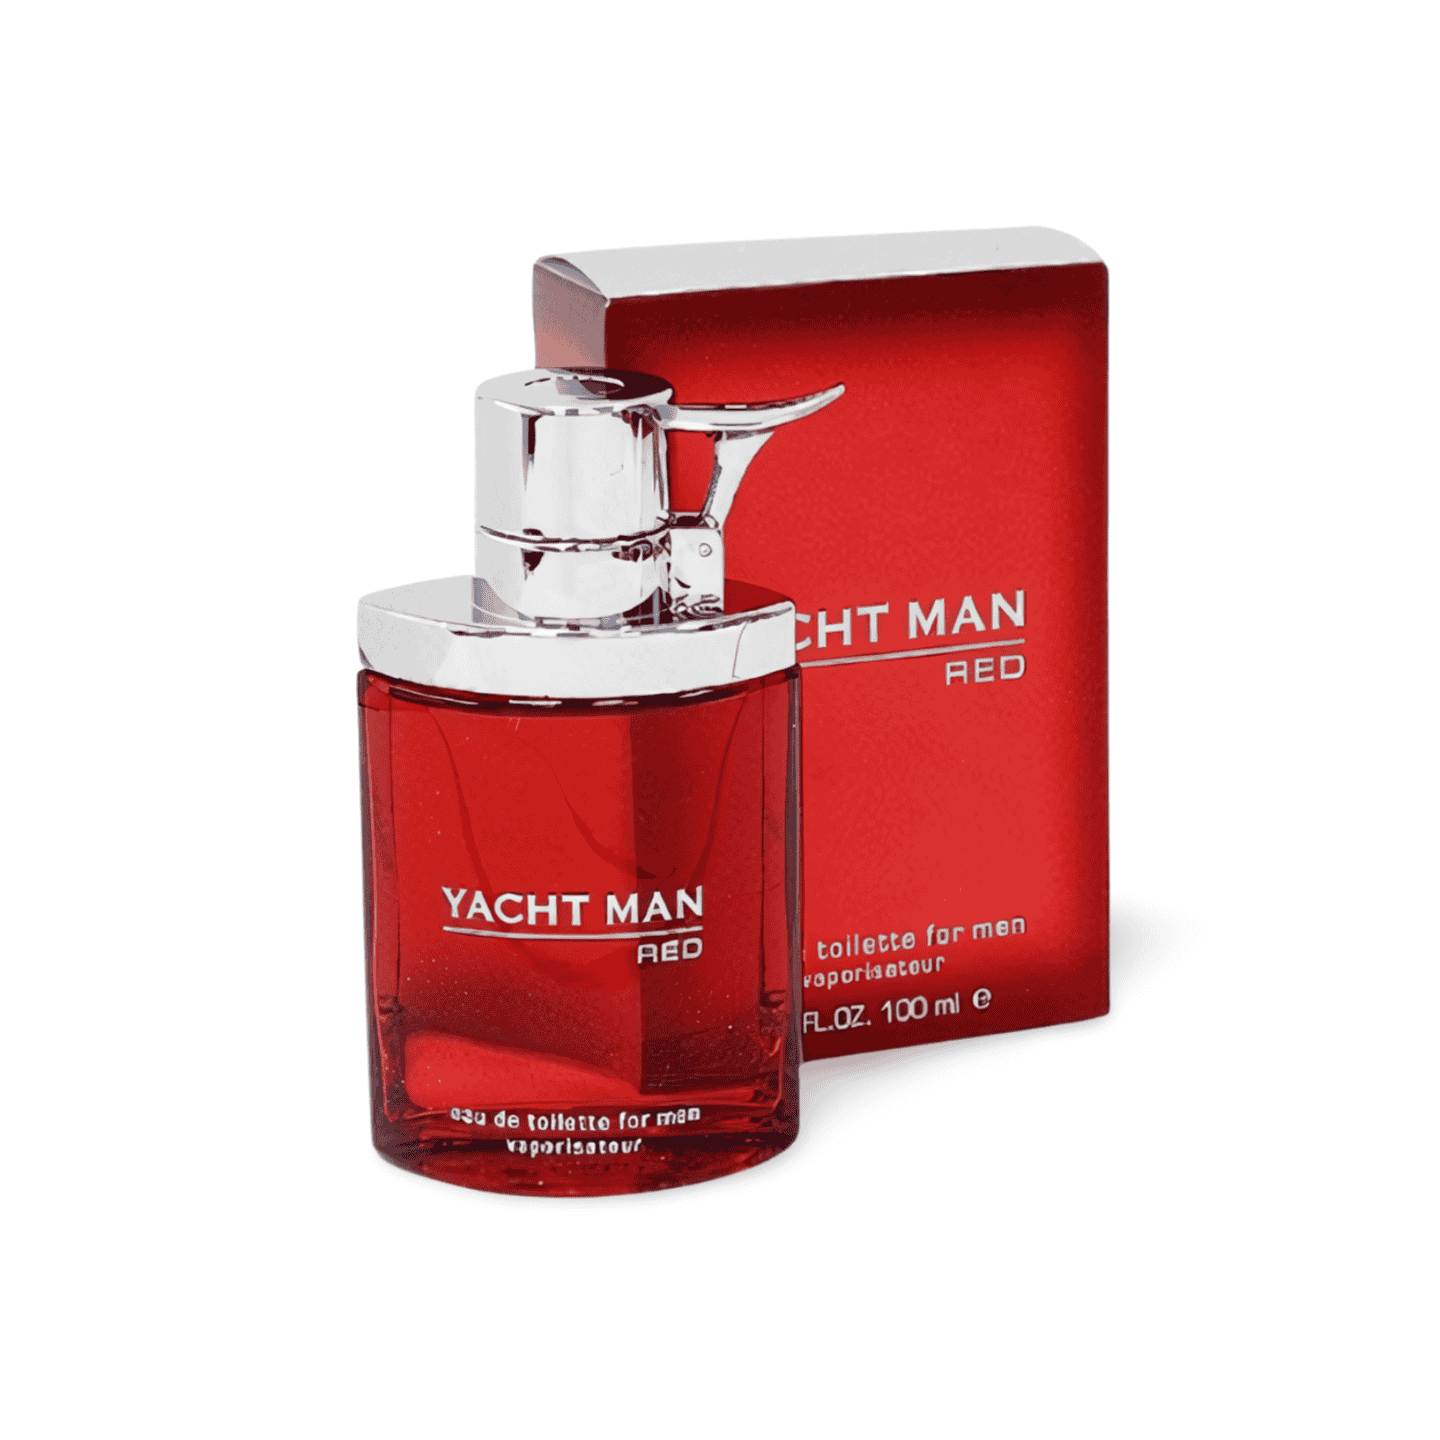 Yacht Man Red Perfume Price In Pakistan - TradeCenter.Pk